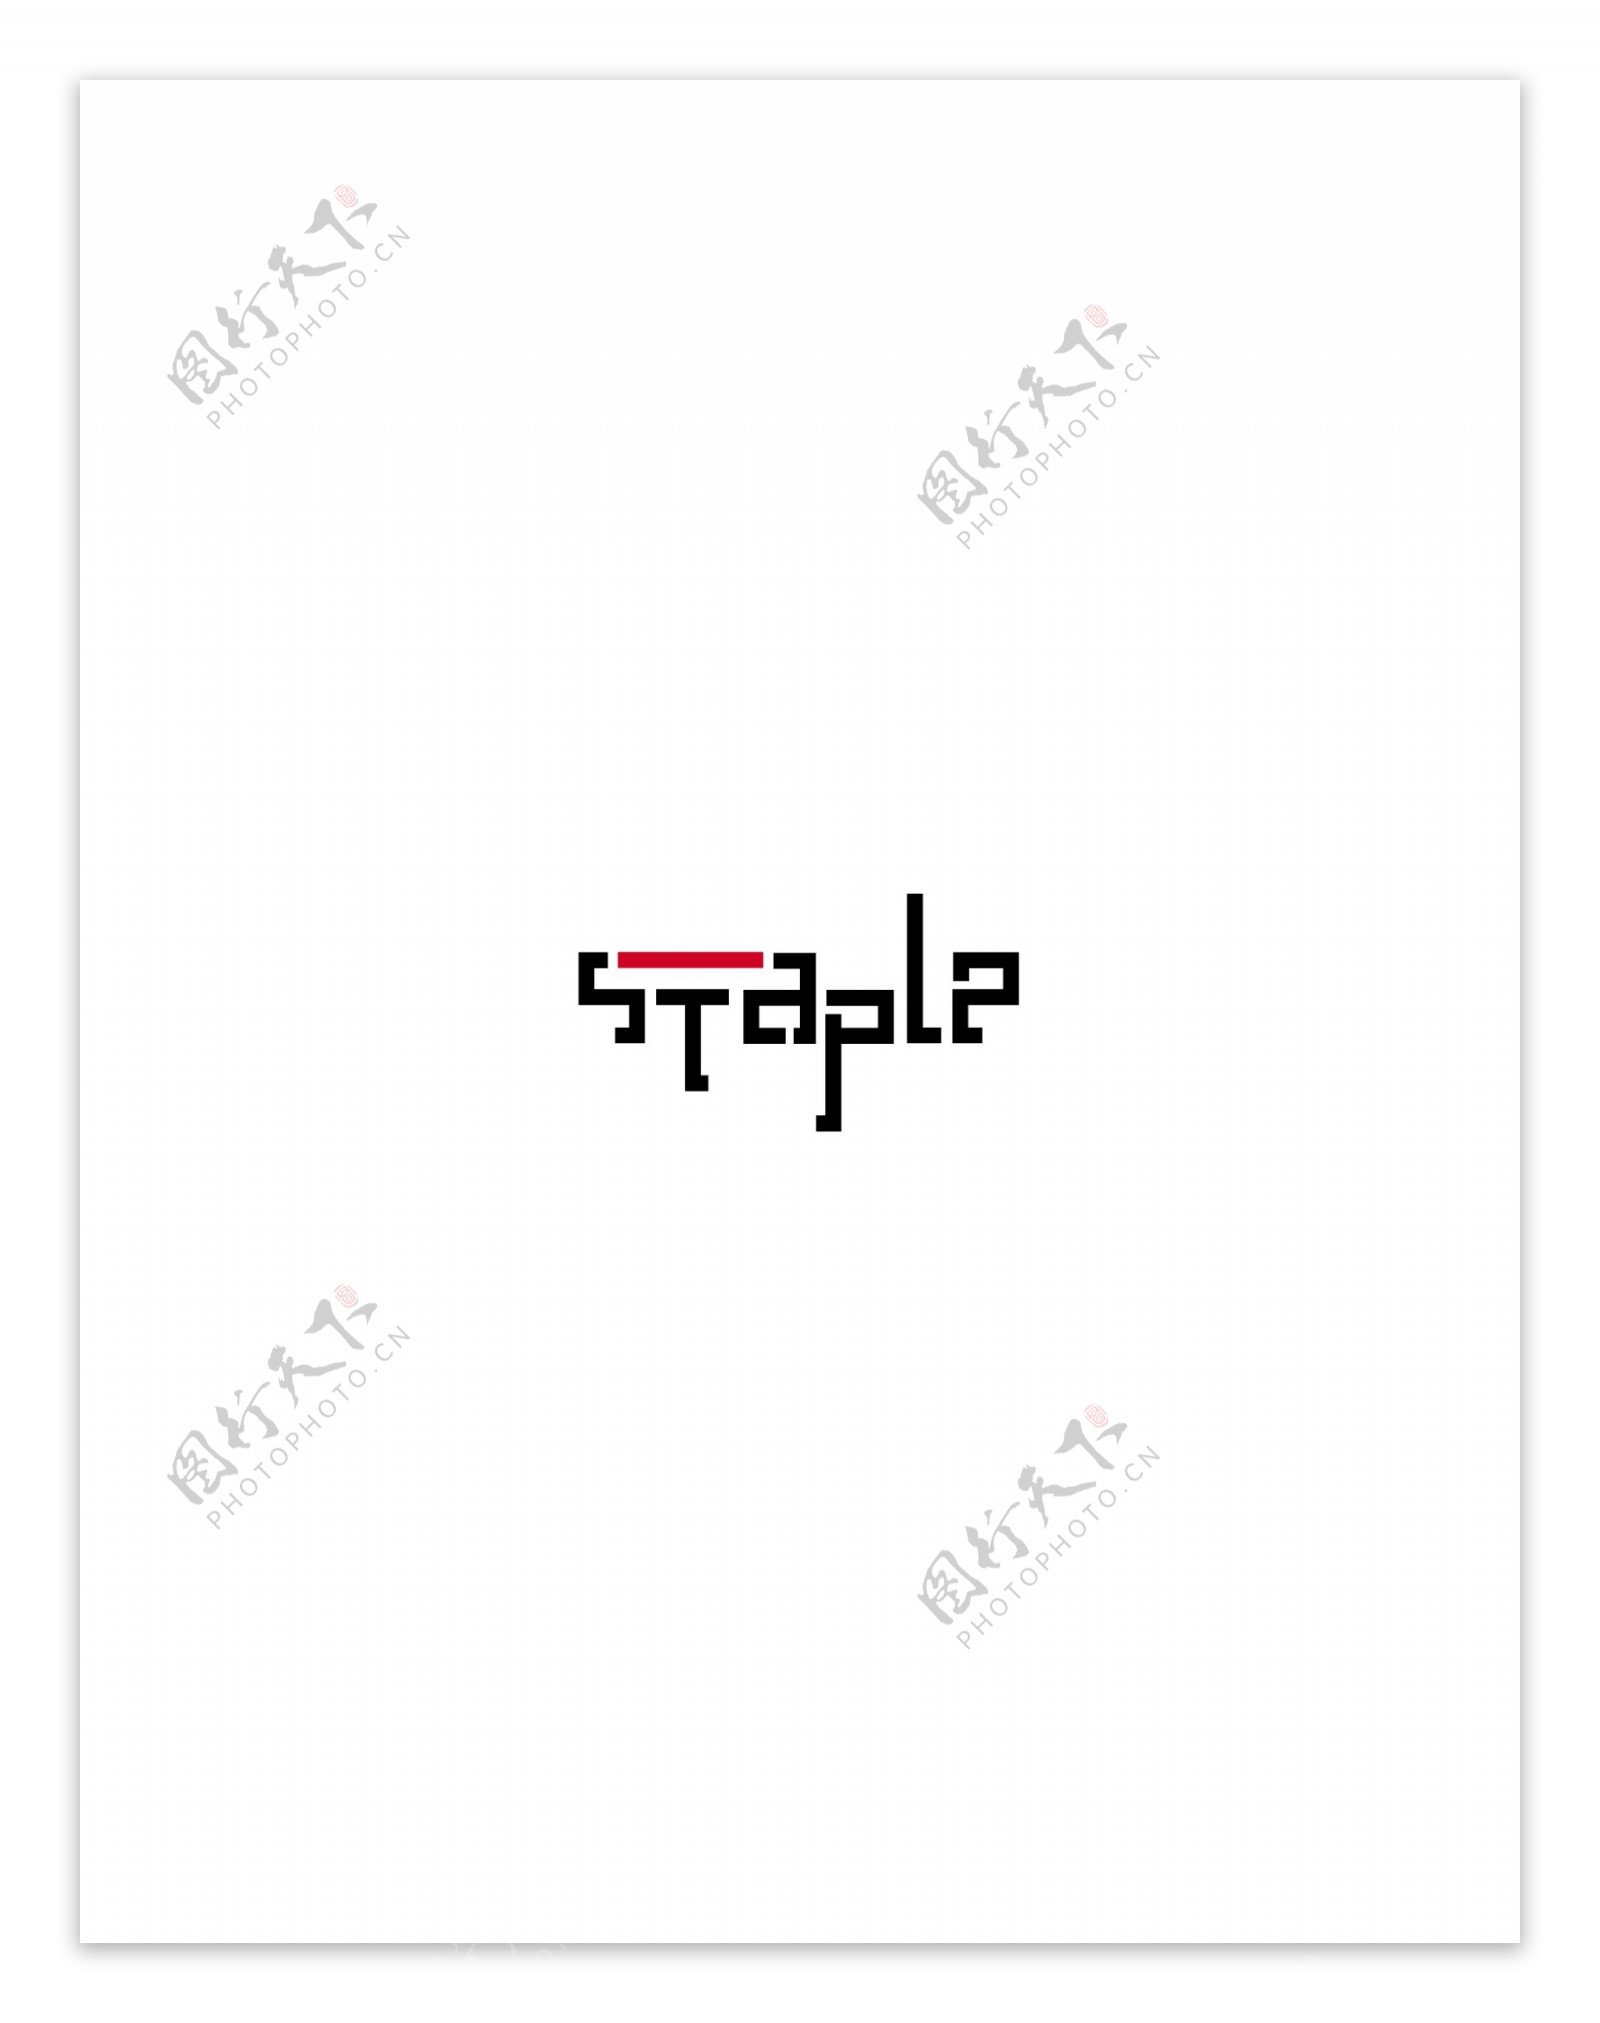 StapleSpacelogo设计欣赏网站LOGO设计StapleSpace下载标志设计欣赏